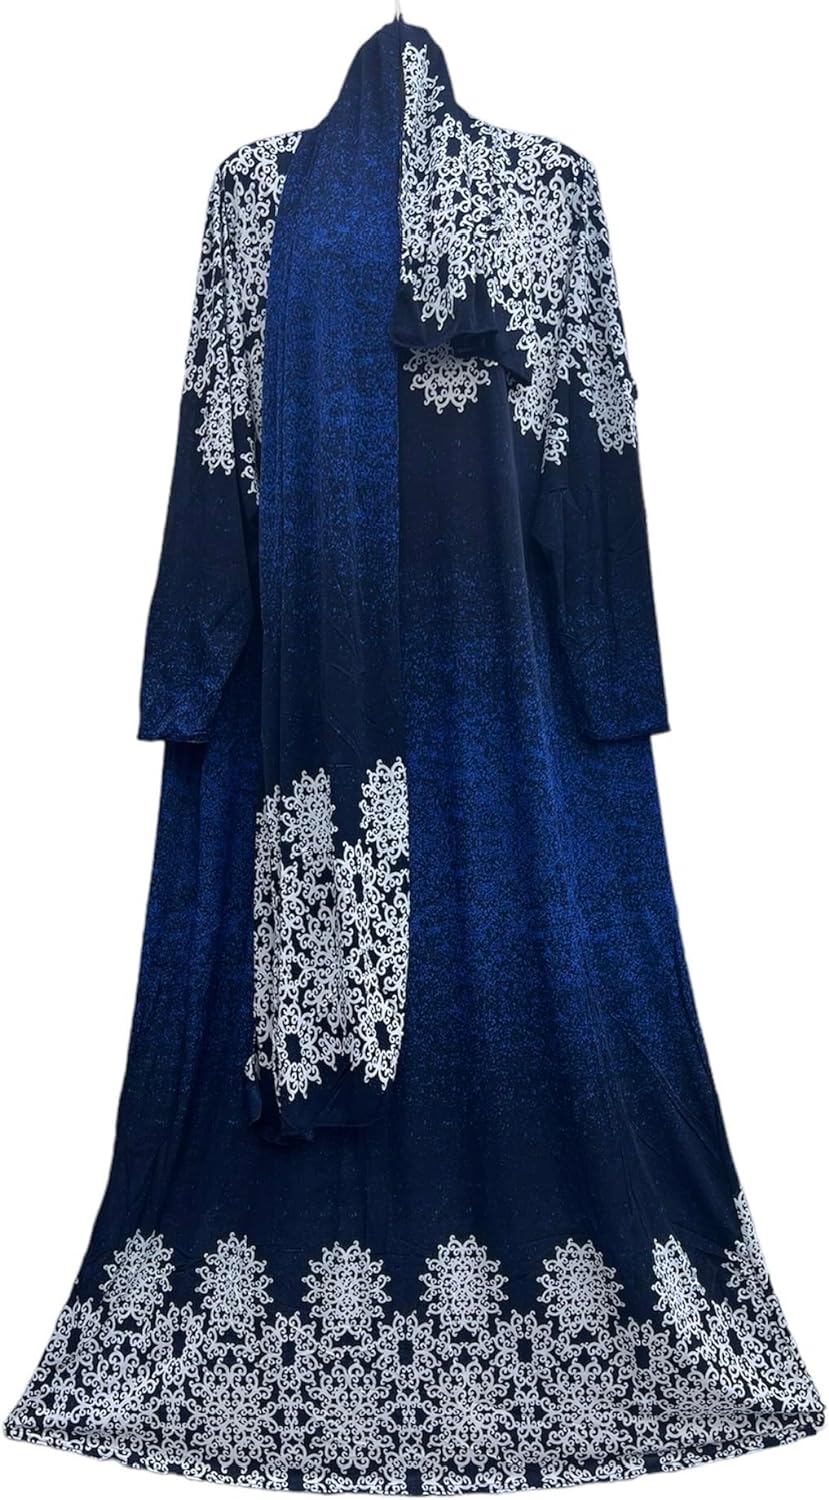 FindsCorner - Tarha Abaya Prayer Dress Prayer Dress for Muslim Women, Soft Breathable Elastic Super Comfy Clothe Material (Navy Blue), One Size